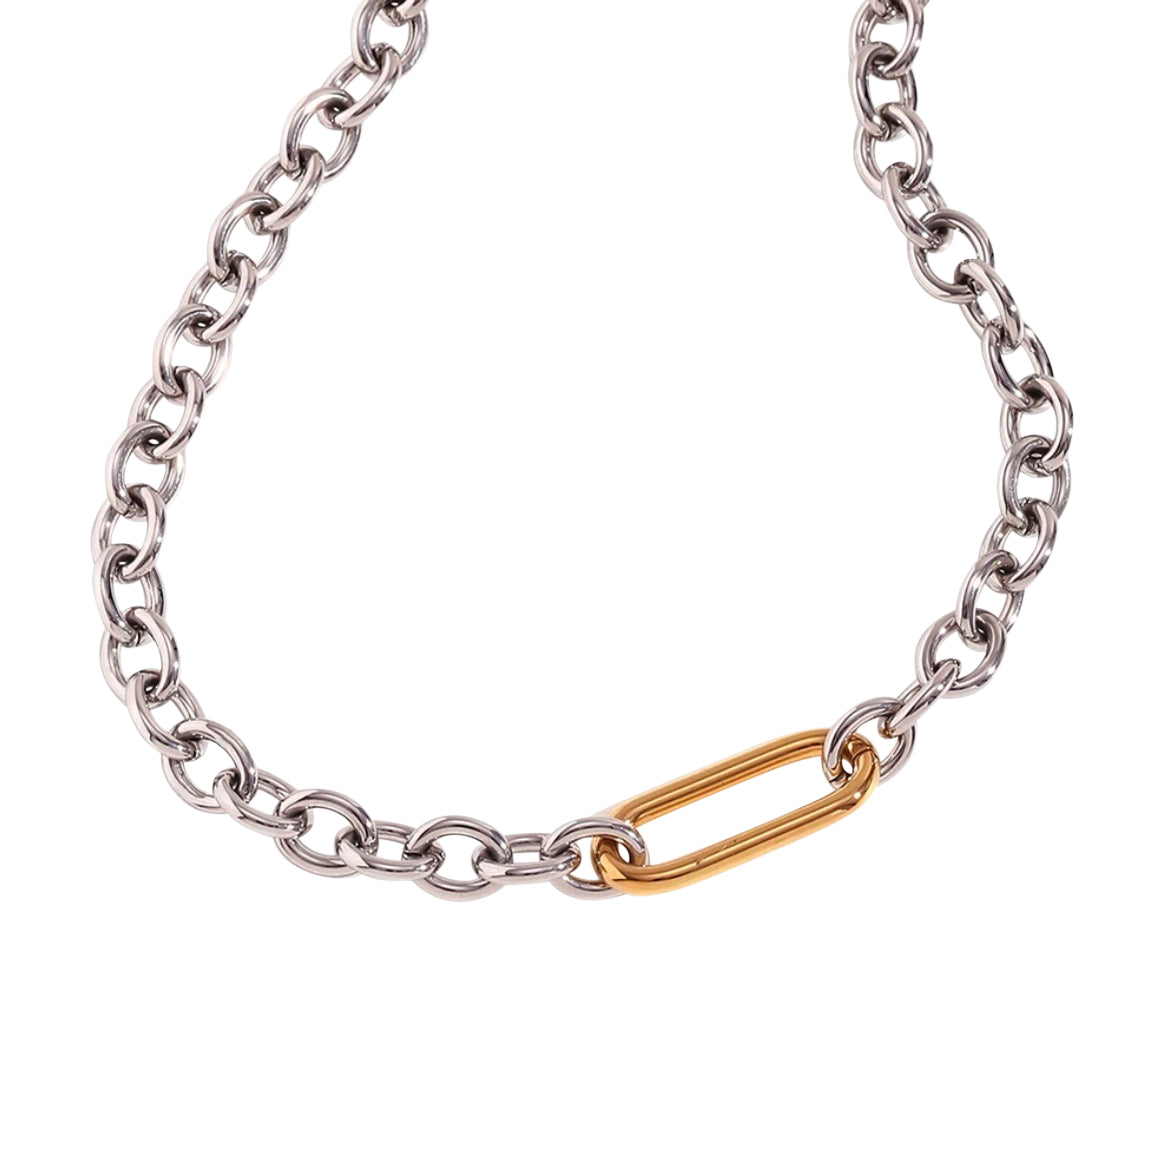 Ada Chain Necklace - Alais Branche